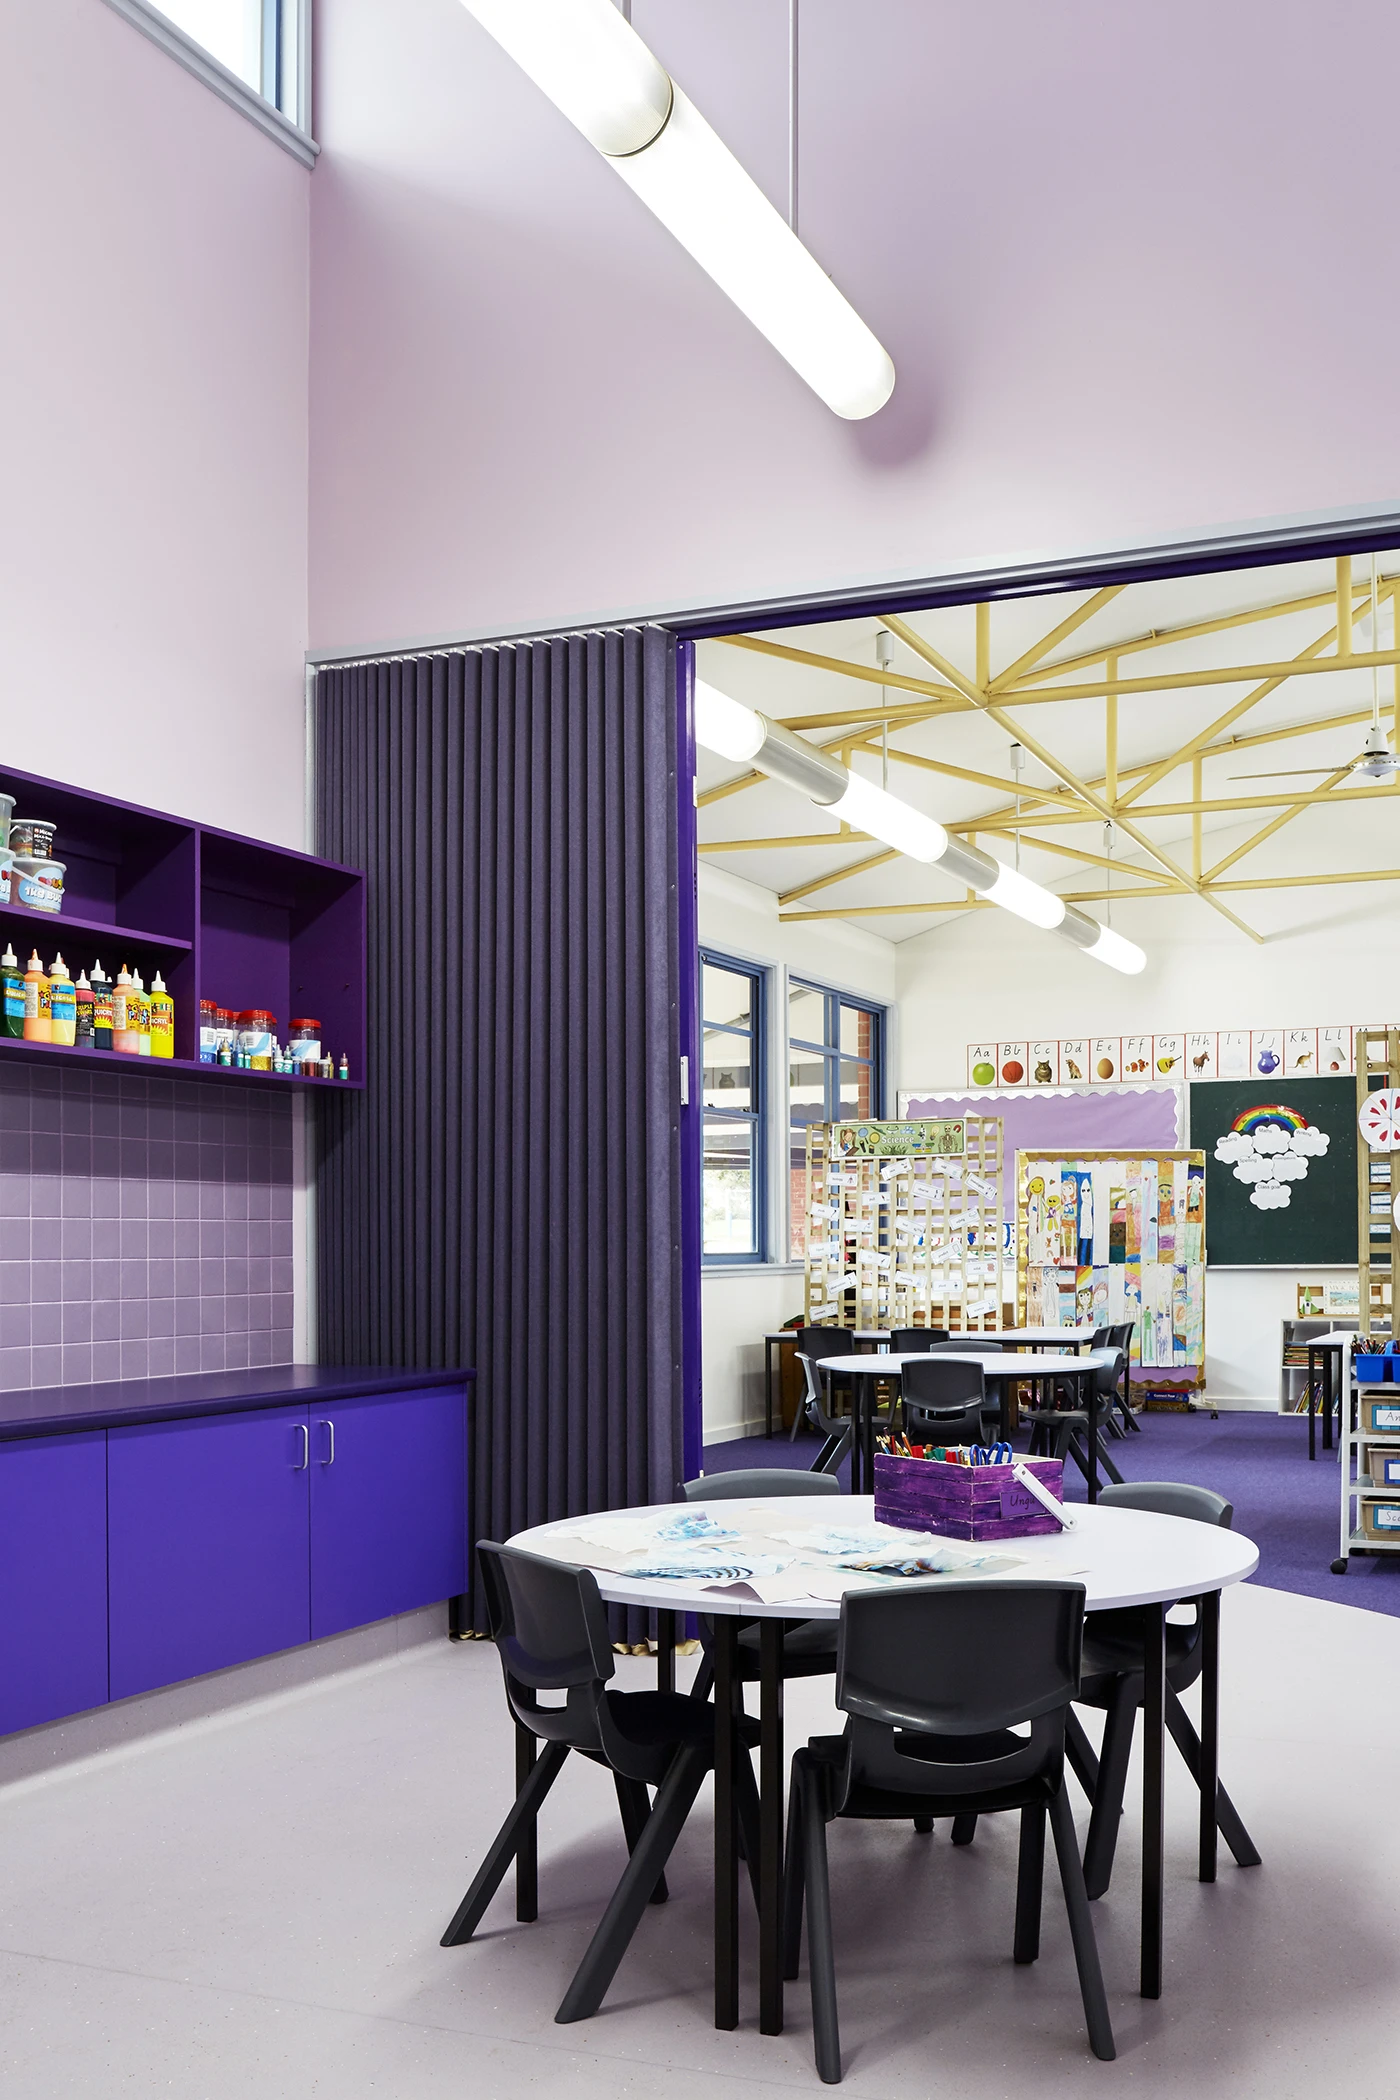 Interior of classroom in three shades of purple.